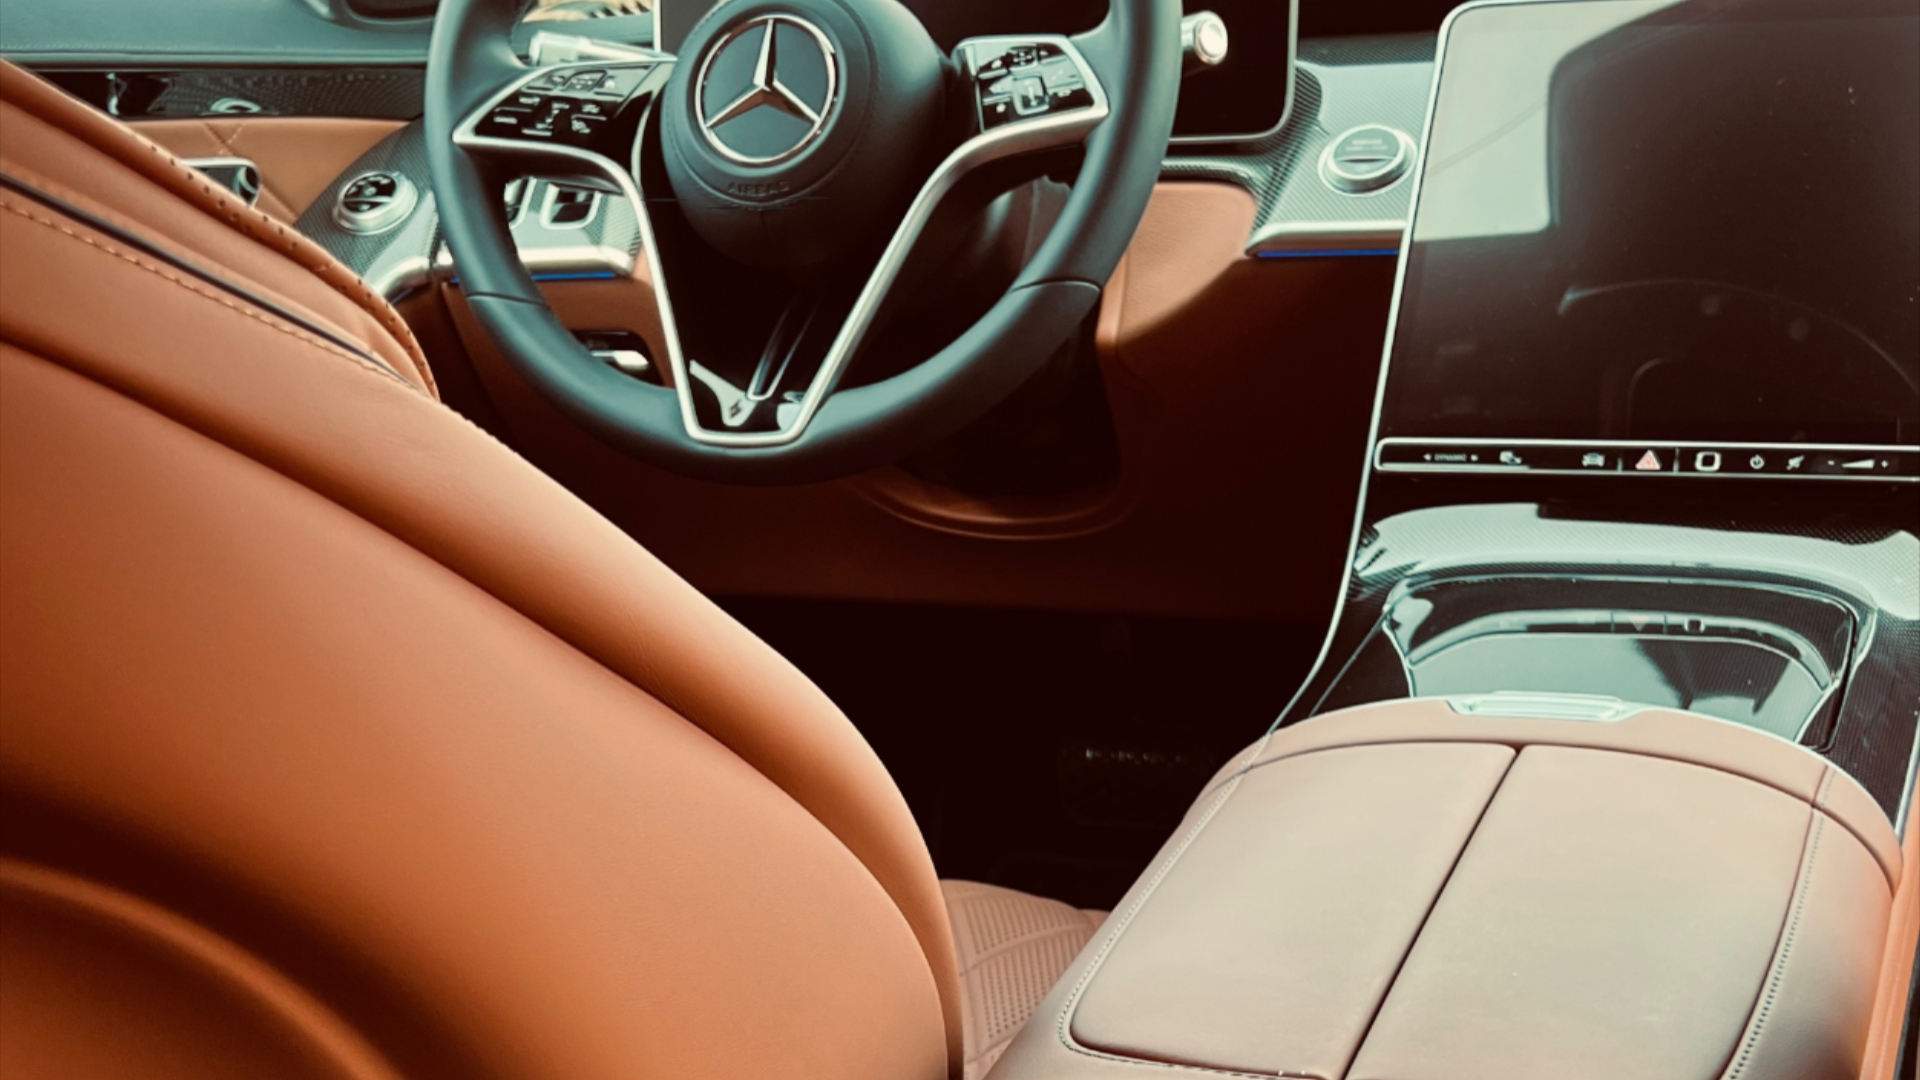 Chauffeurservice luxuriöse Mercedes S-Klasse